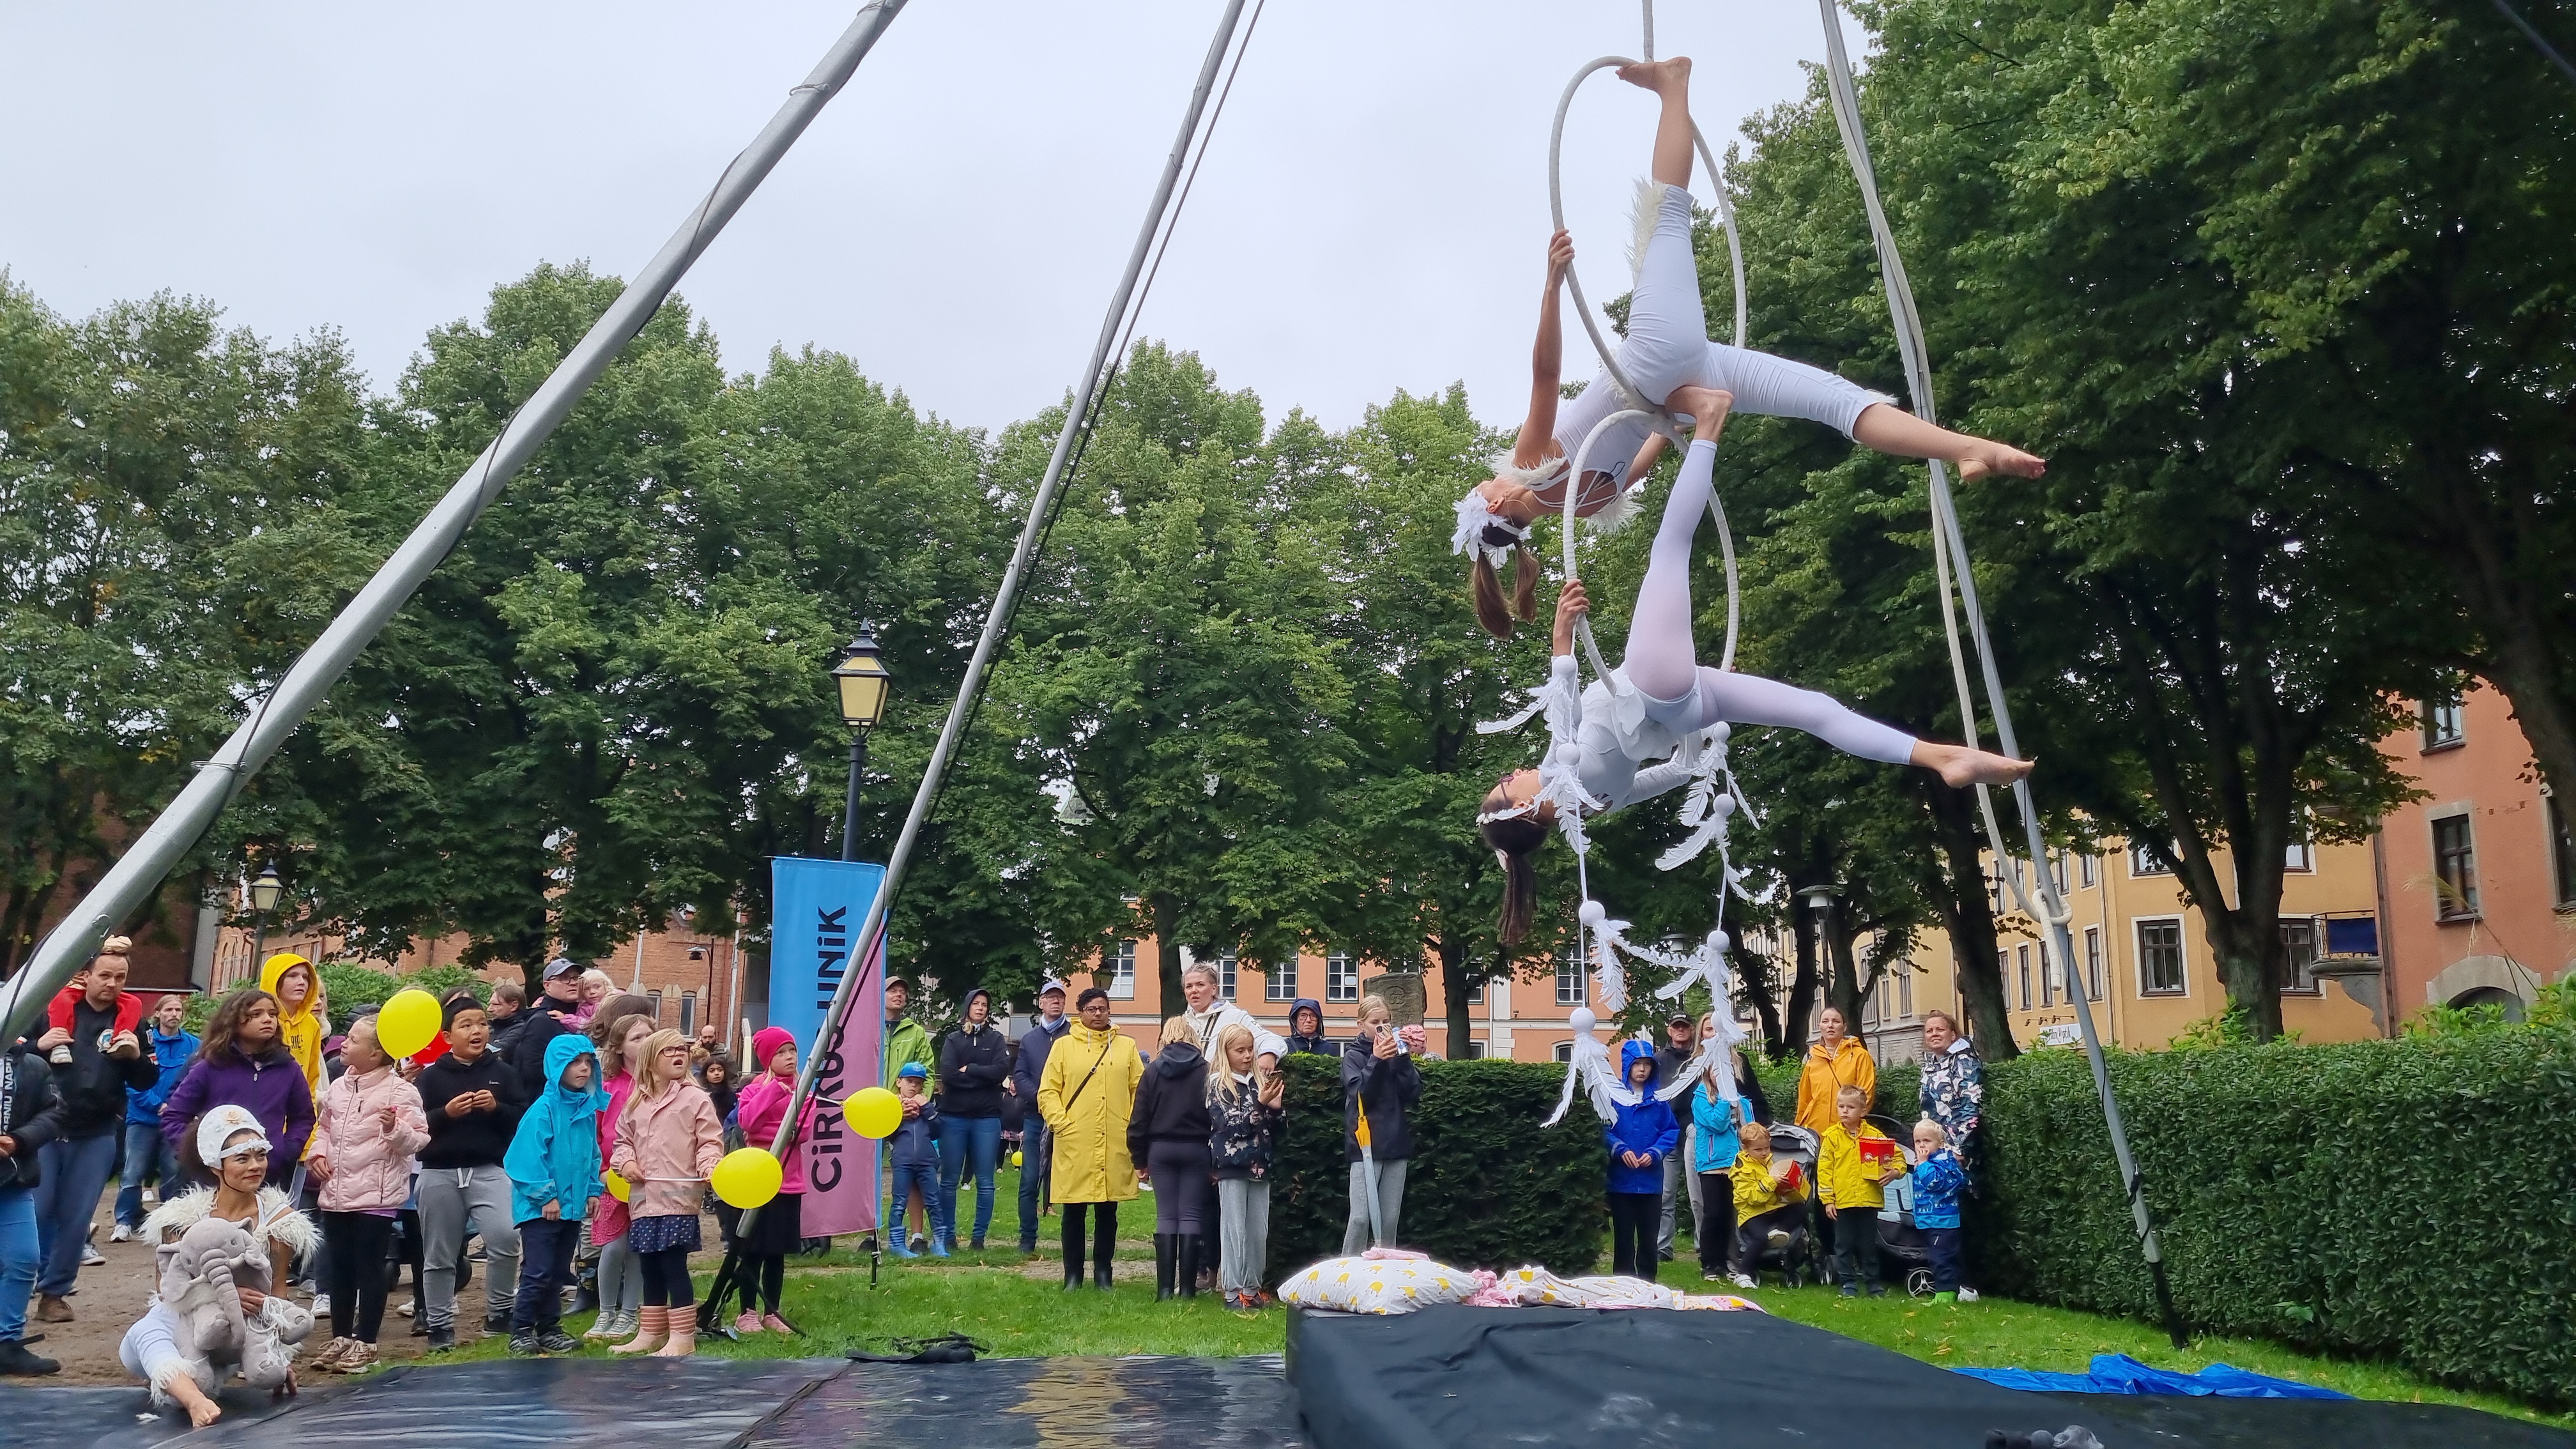 Cirkus unik uppträder med sin akrobatikshow